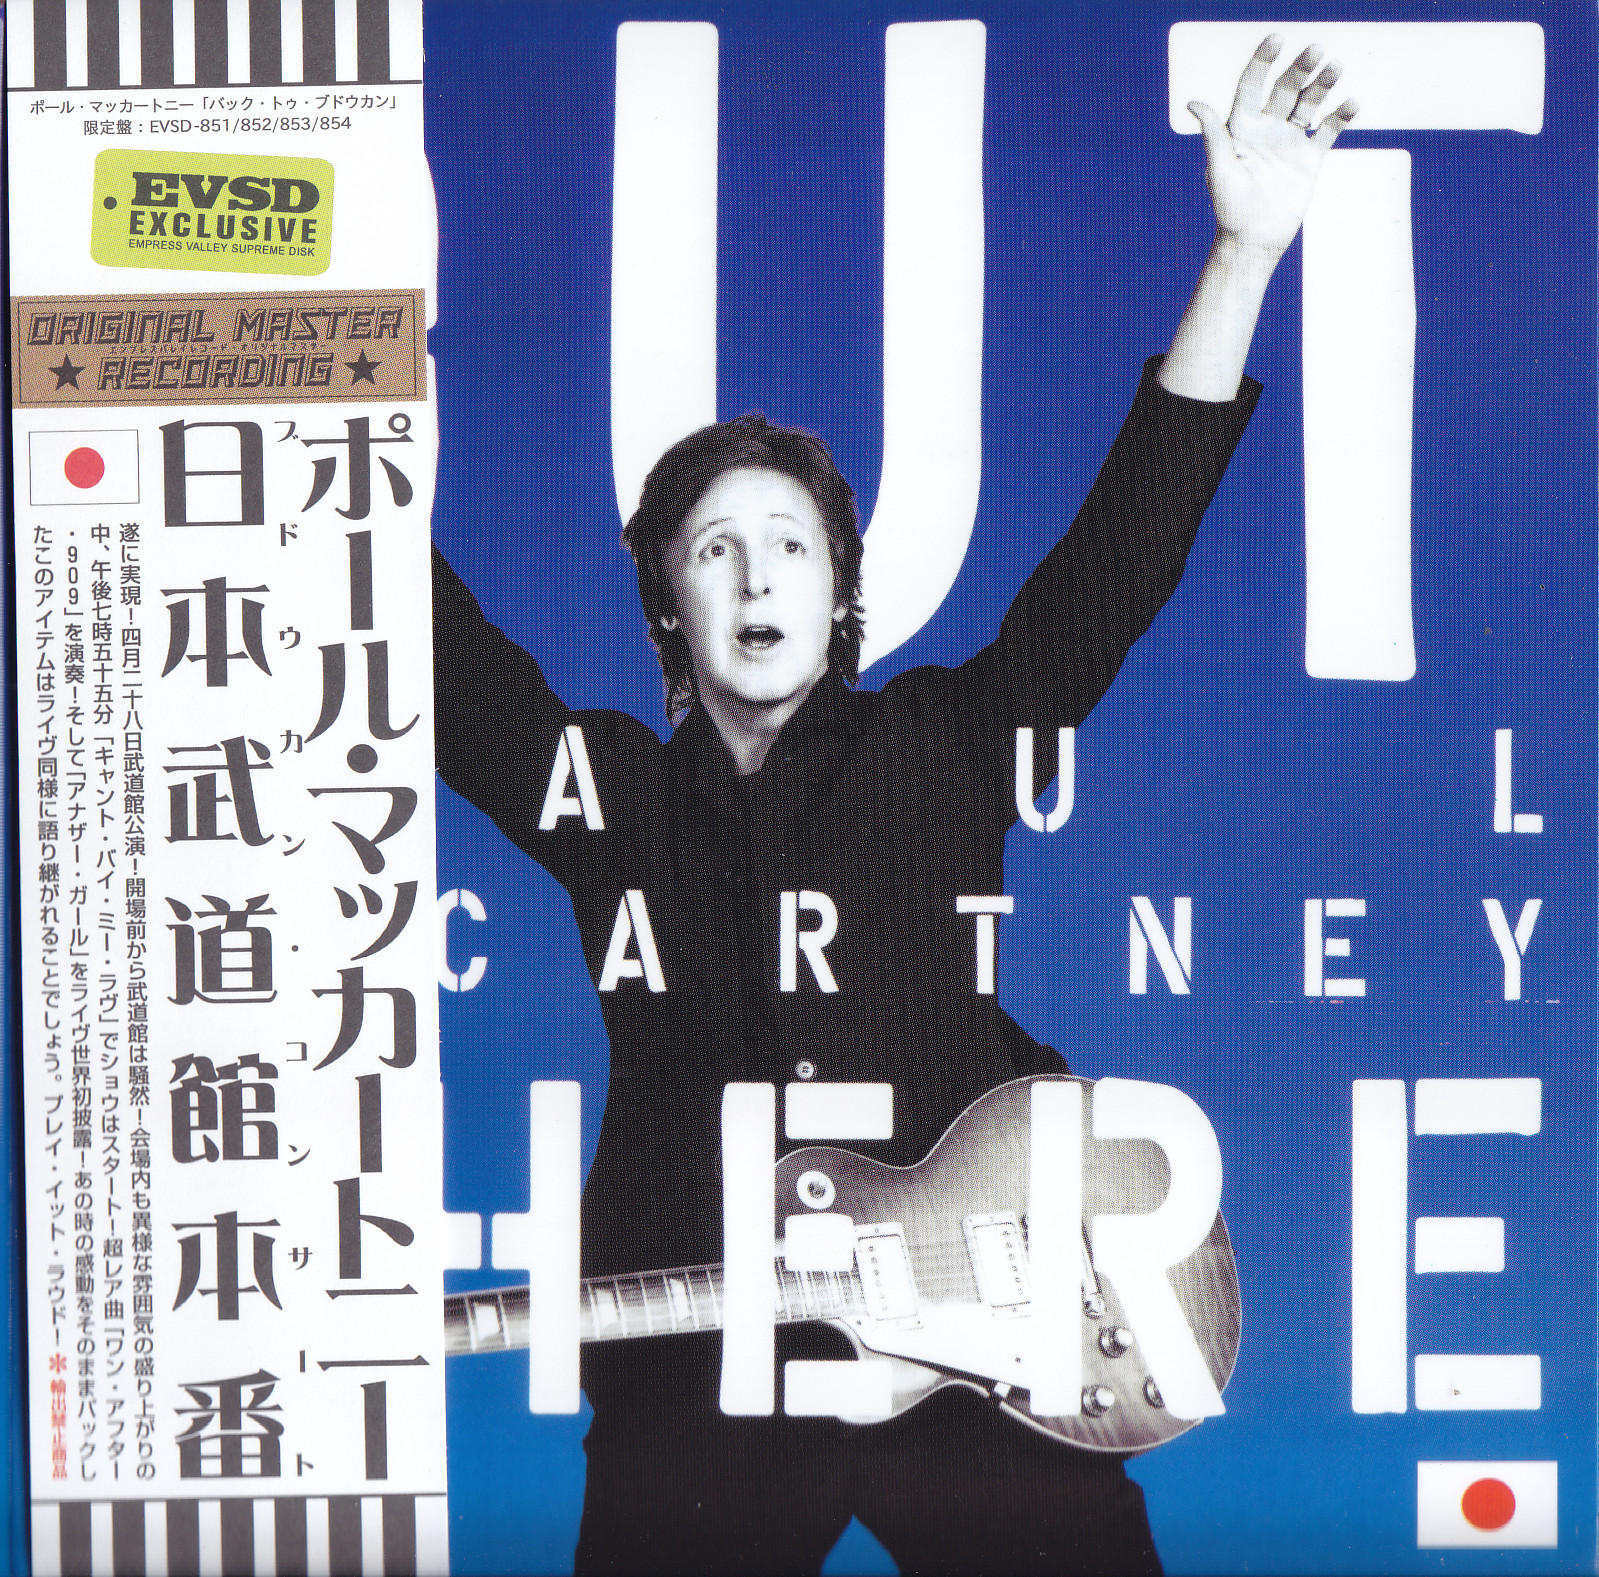 PAUL McCARTNEY/ OUT THERE JAPAN TOUR 2015, 12-CD BOX SET, EMPRESS 